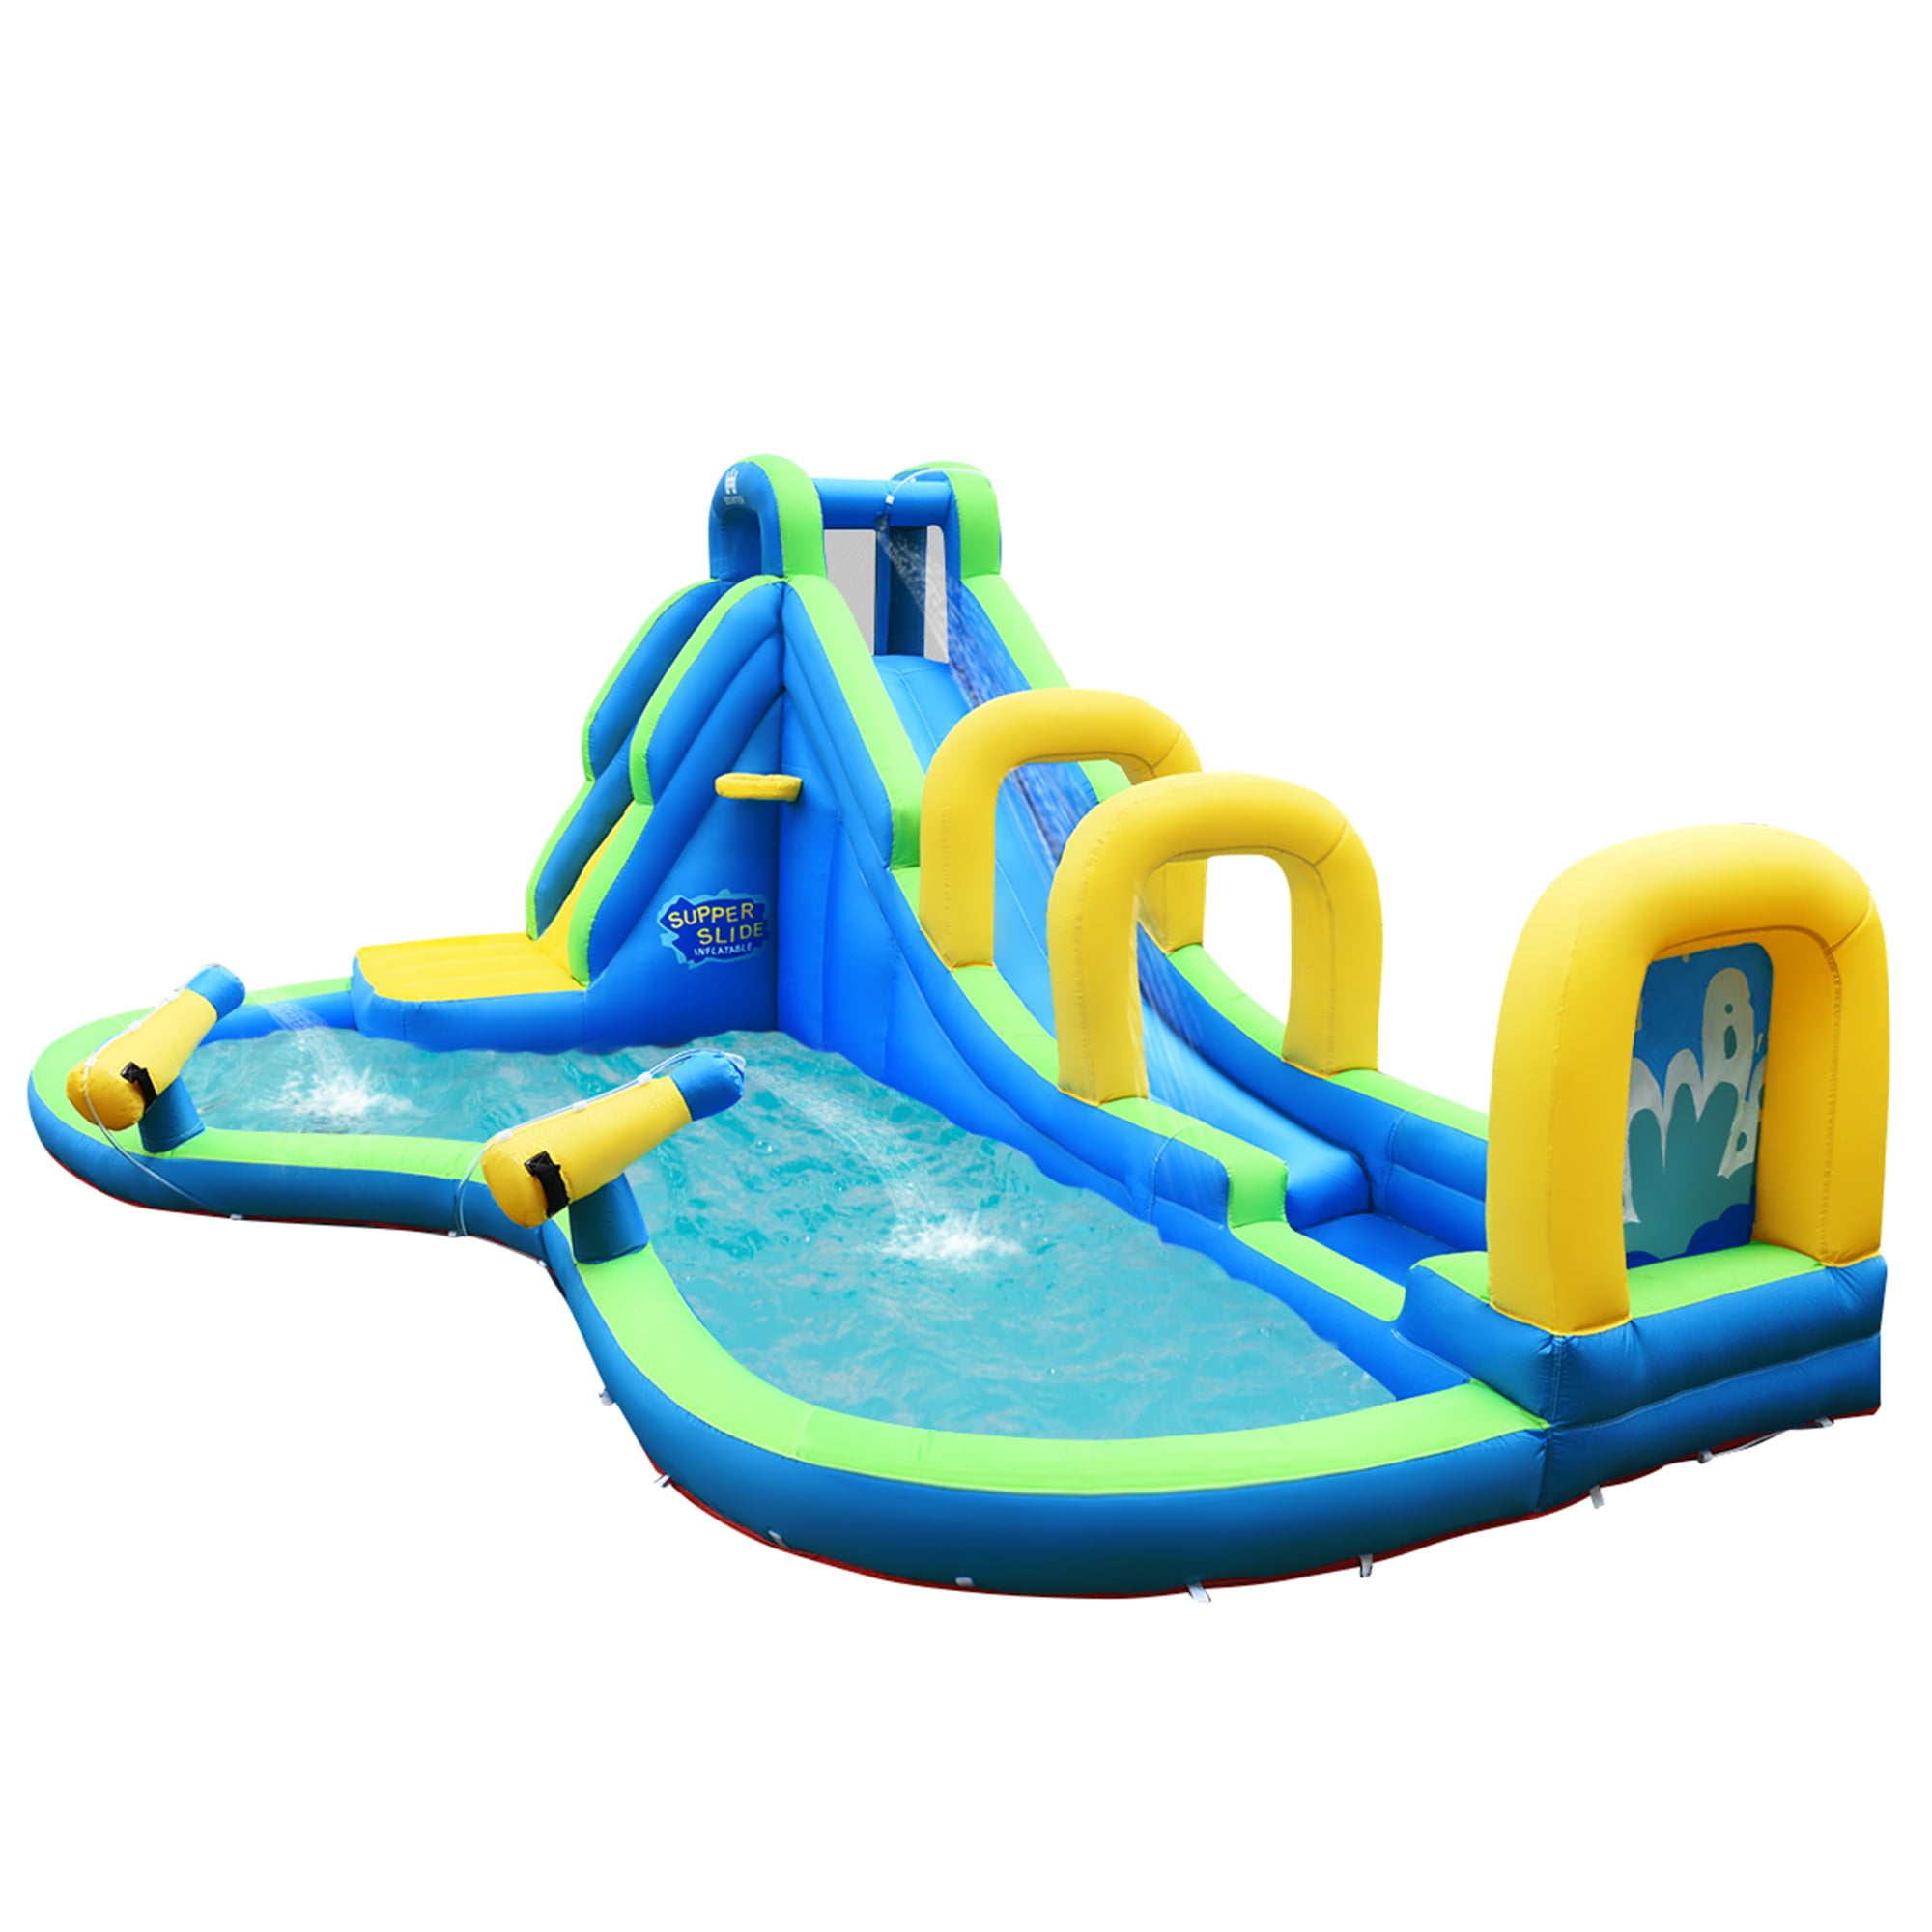 cheerfullus-123 Double Backyard Water Slide for Kids,Watersports Backyard Waterslide,Garden Lawn Water Slides Summer Water Toys for Kids Garden Play,16 Feet x 5 Feet 